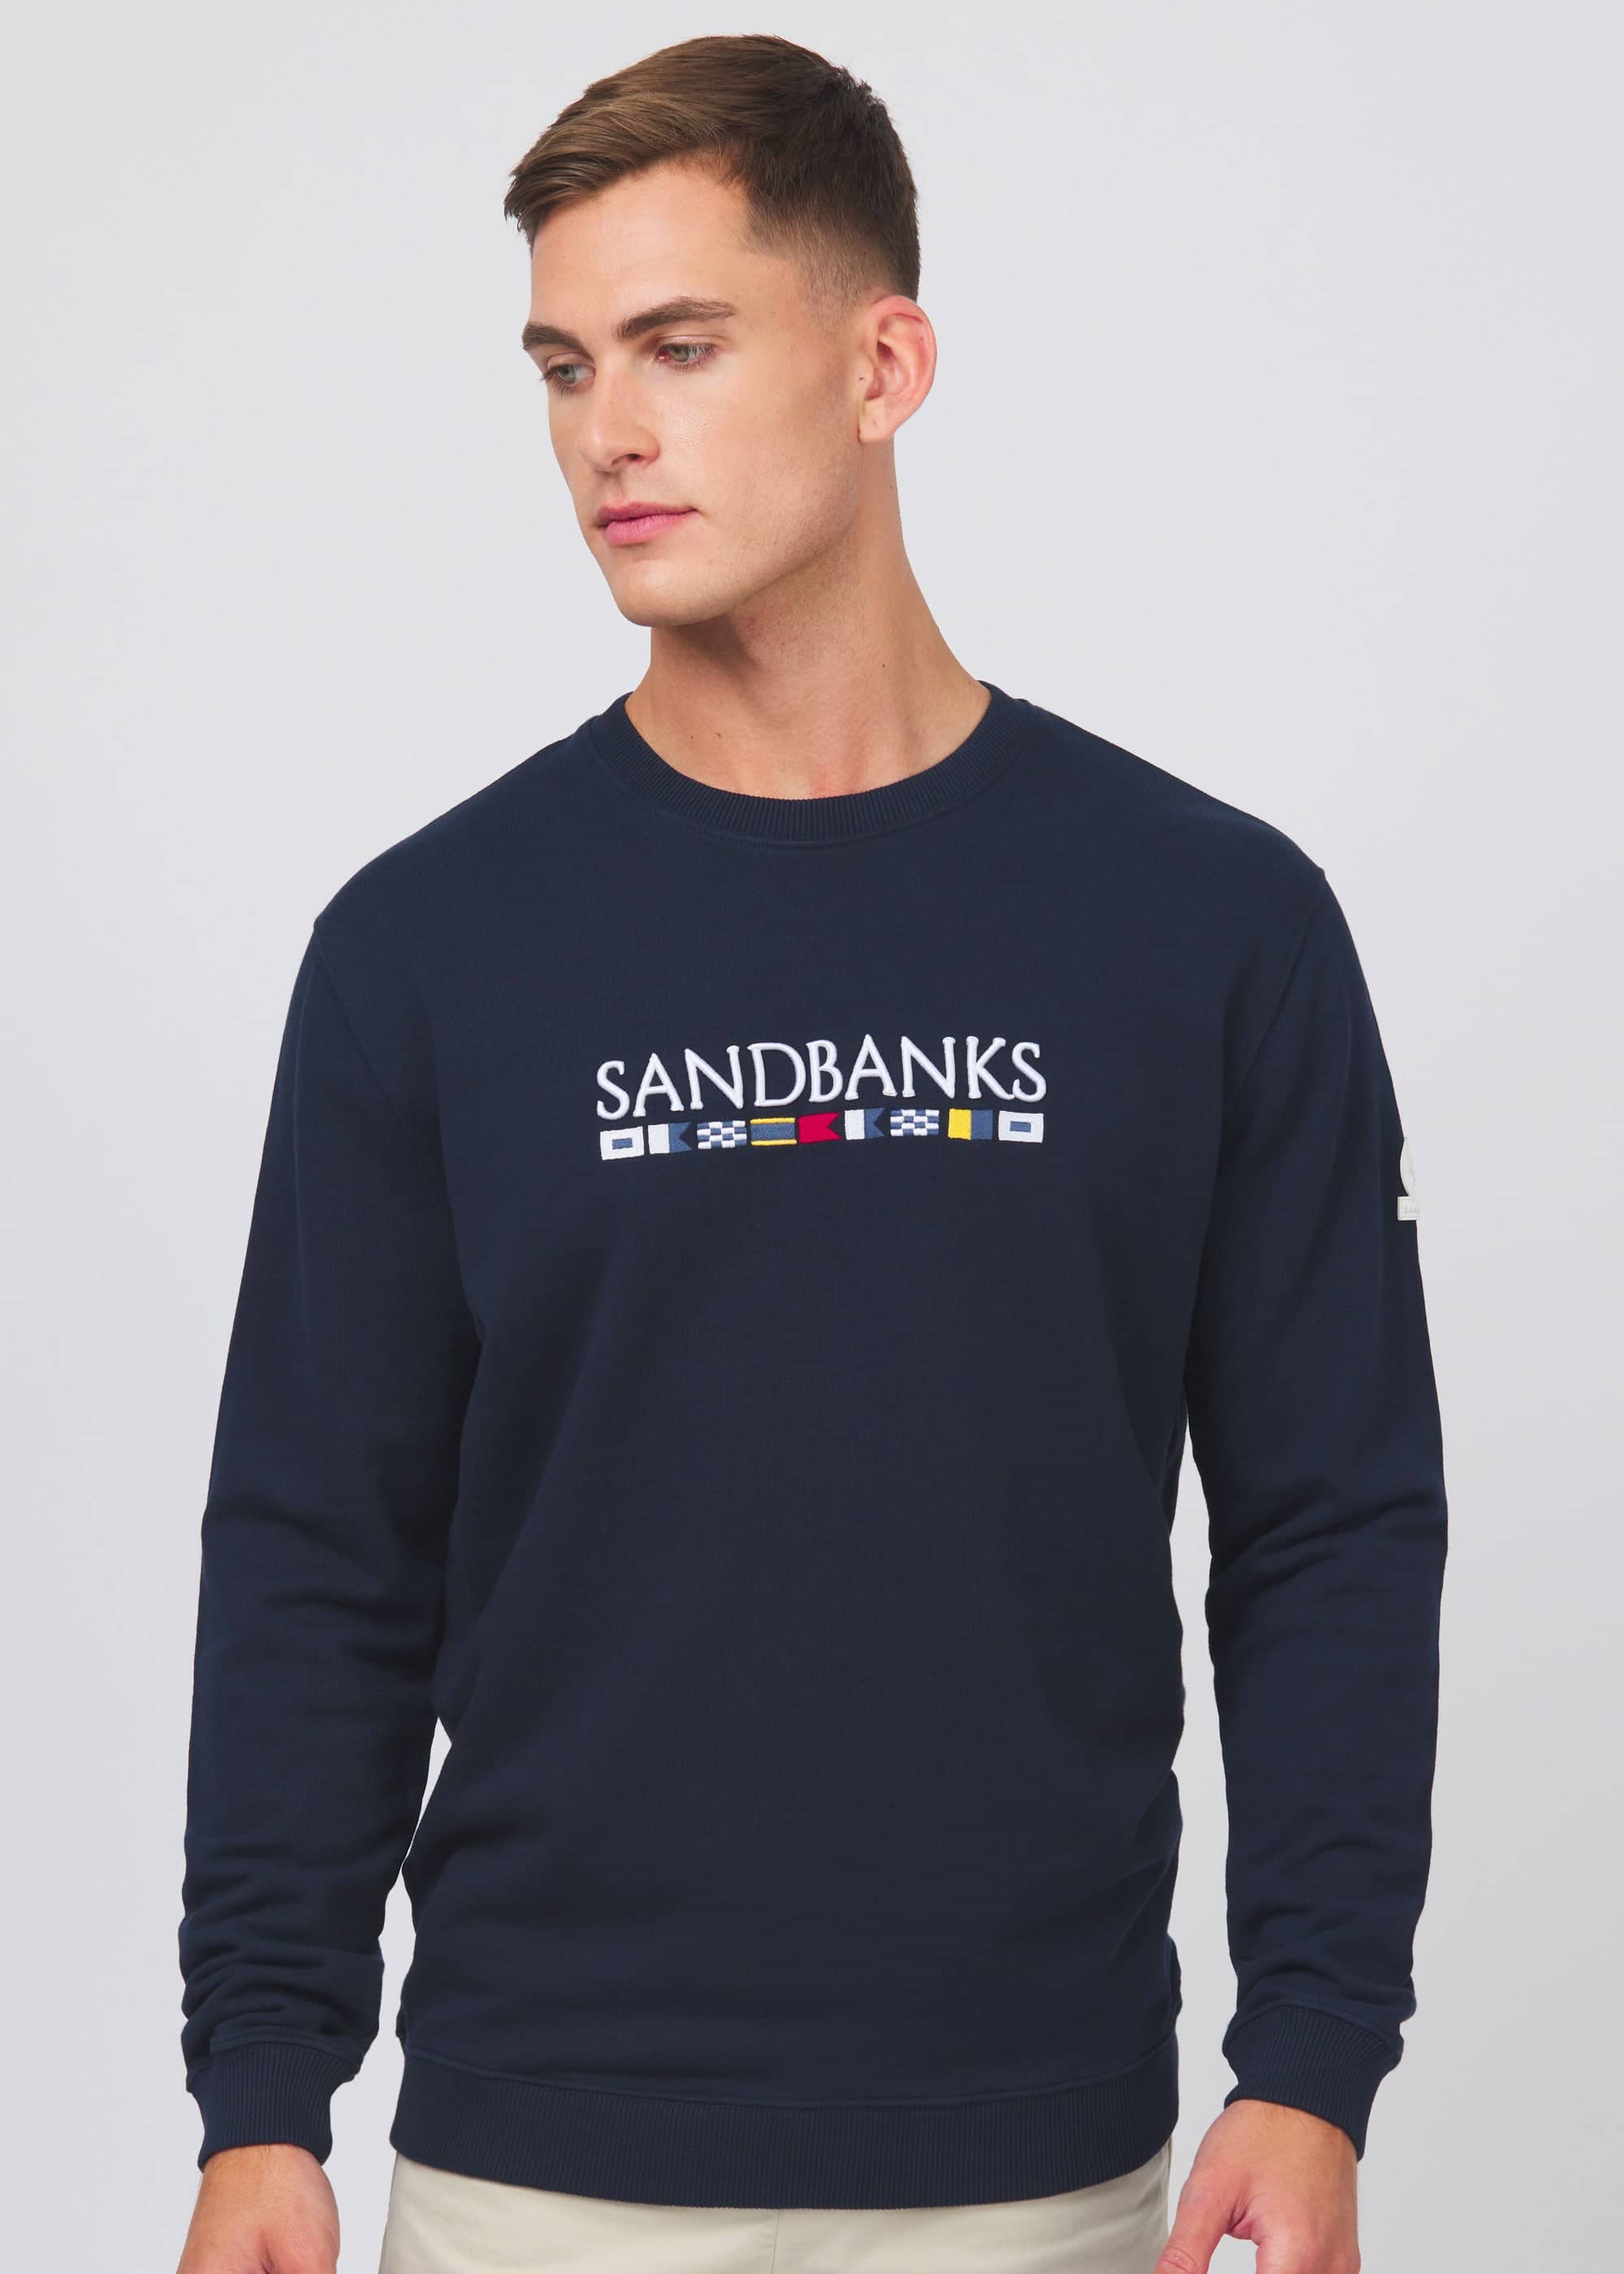 Sandbanks Signal Sweatshirt - Navy